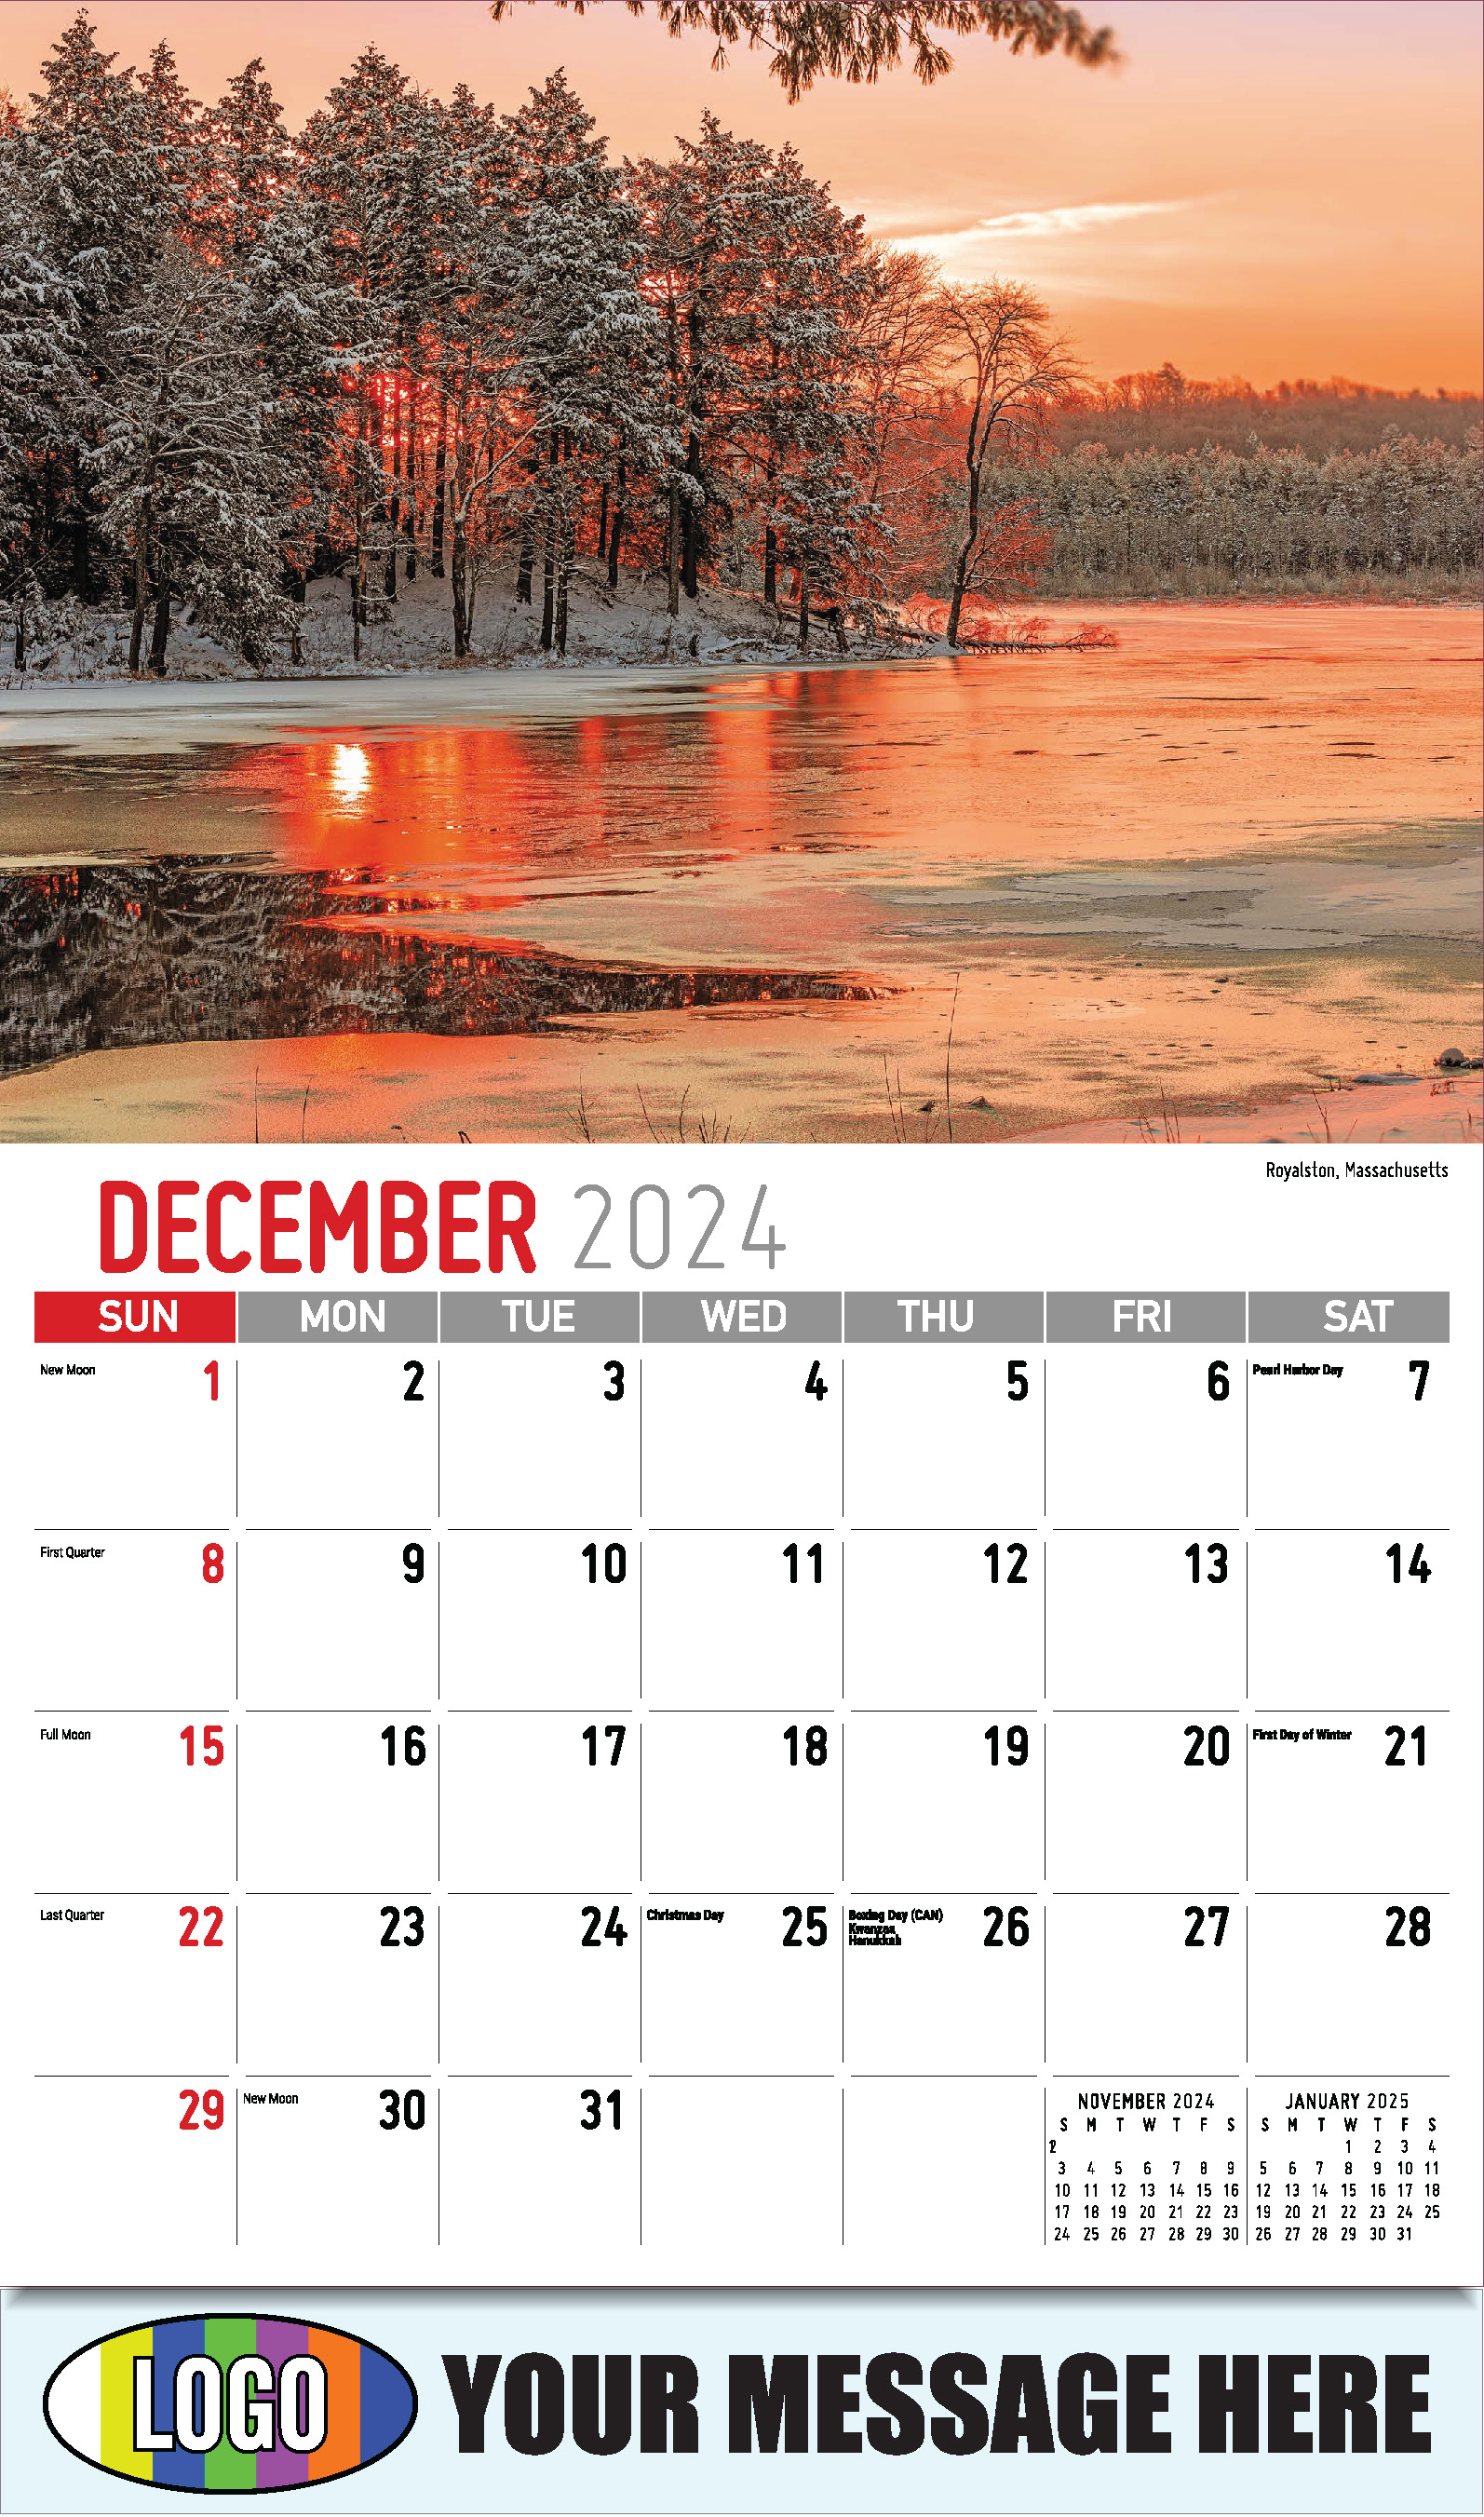 Scenes of New England 2025 Business Advertising Wall Calendar - December_a